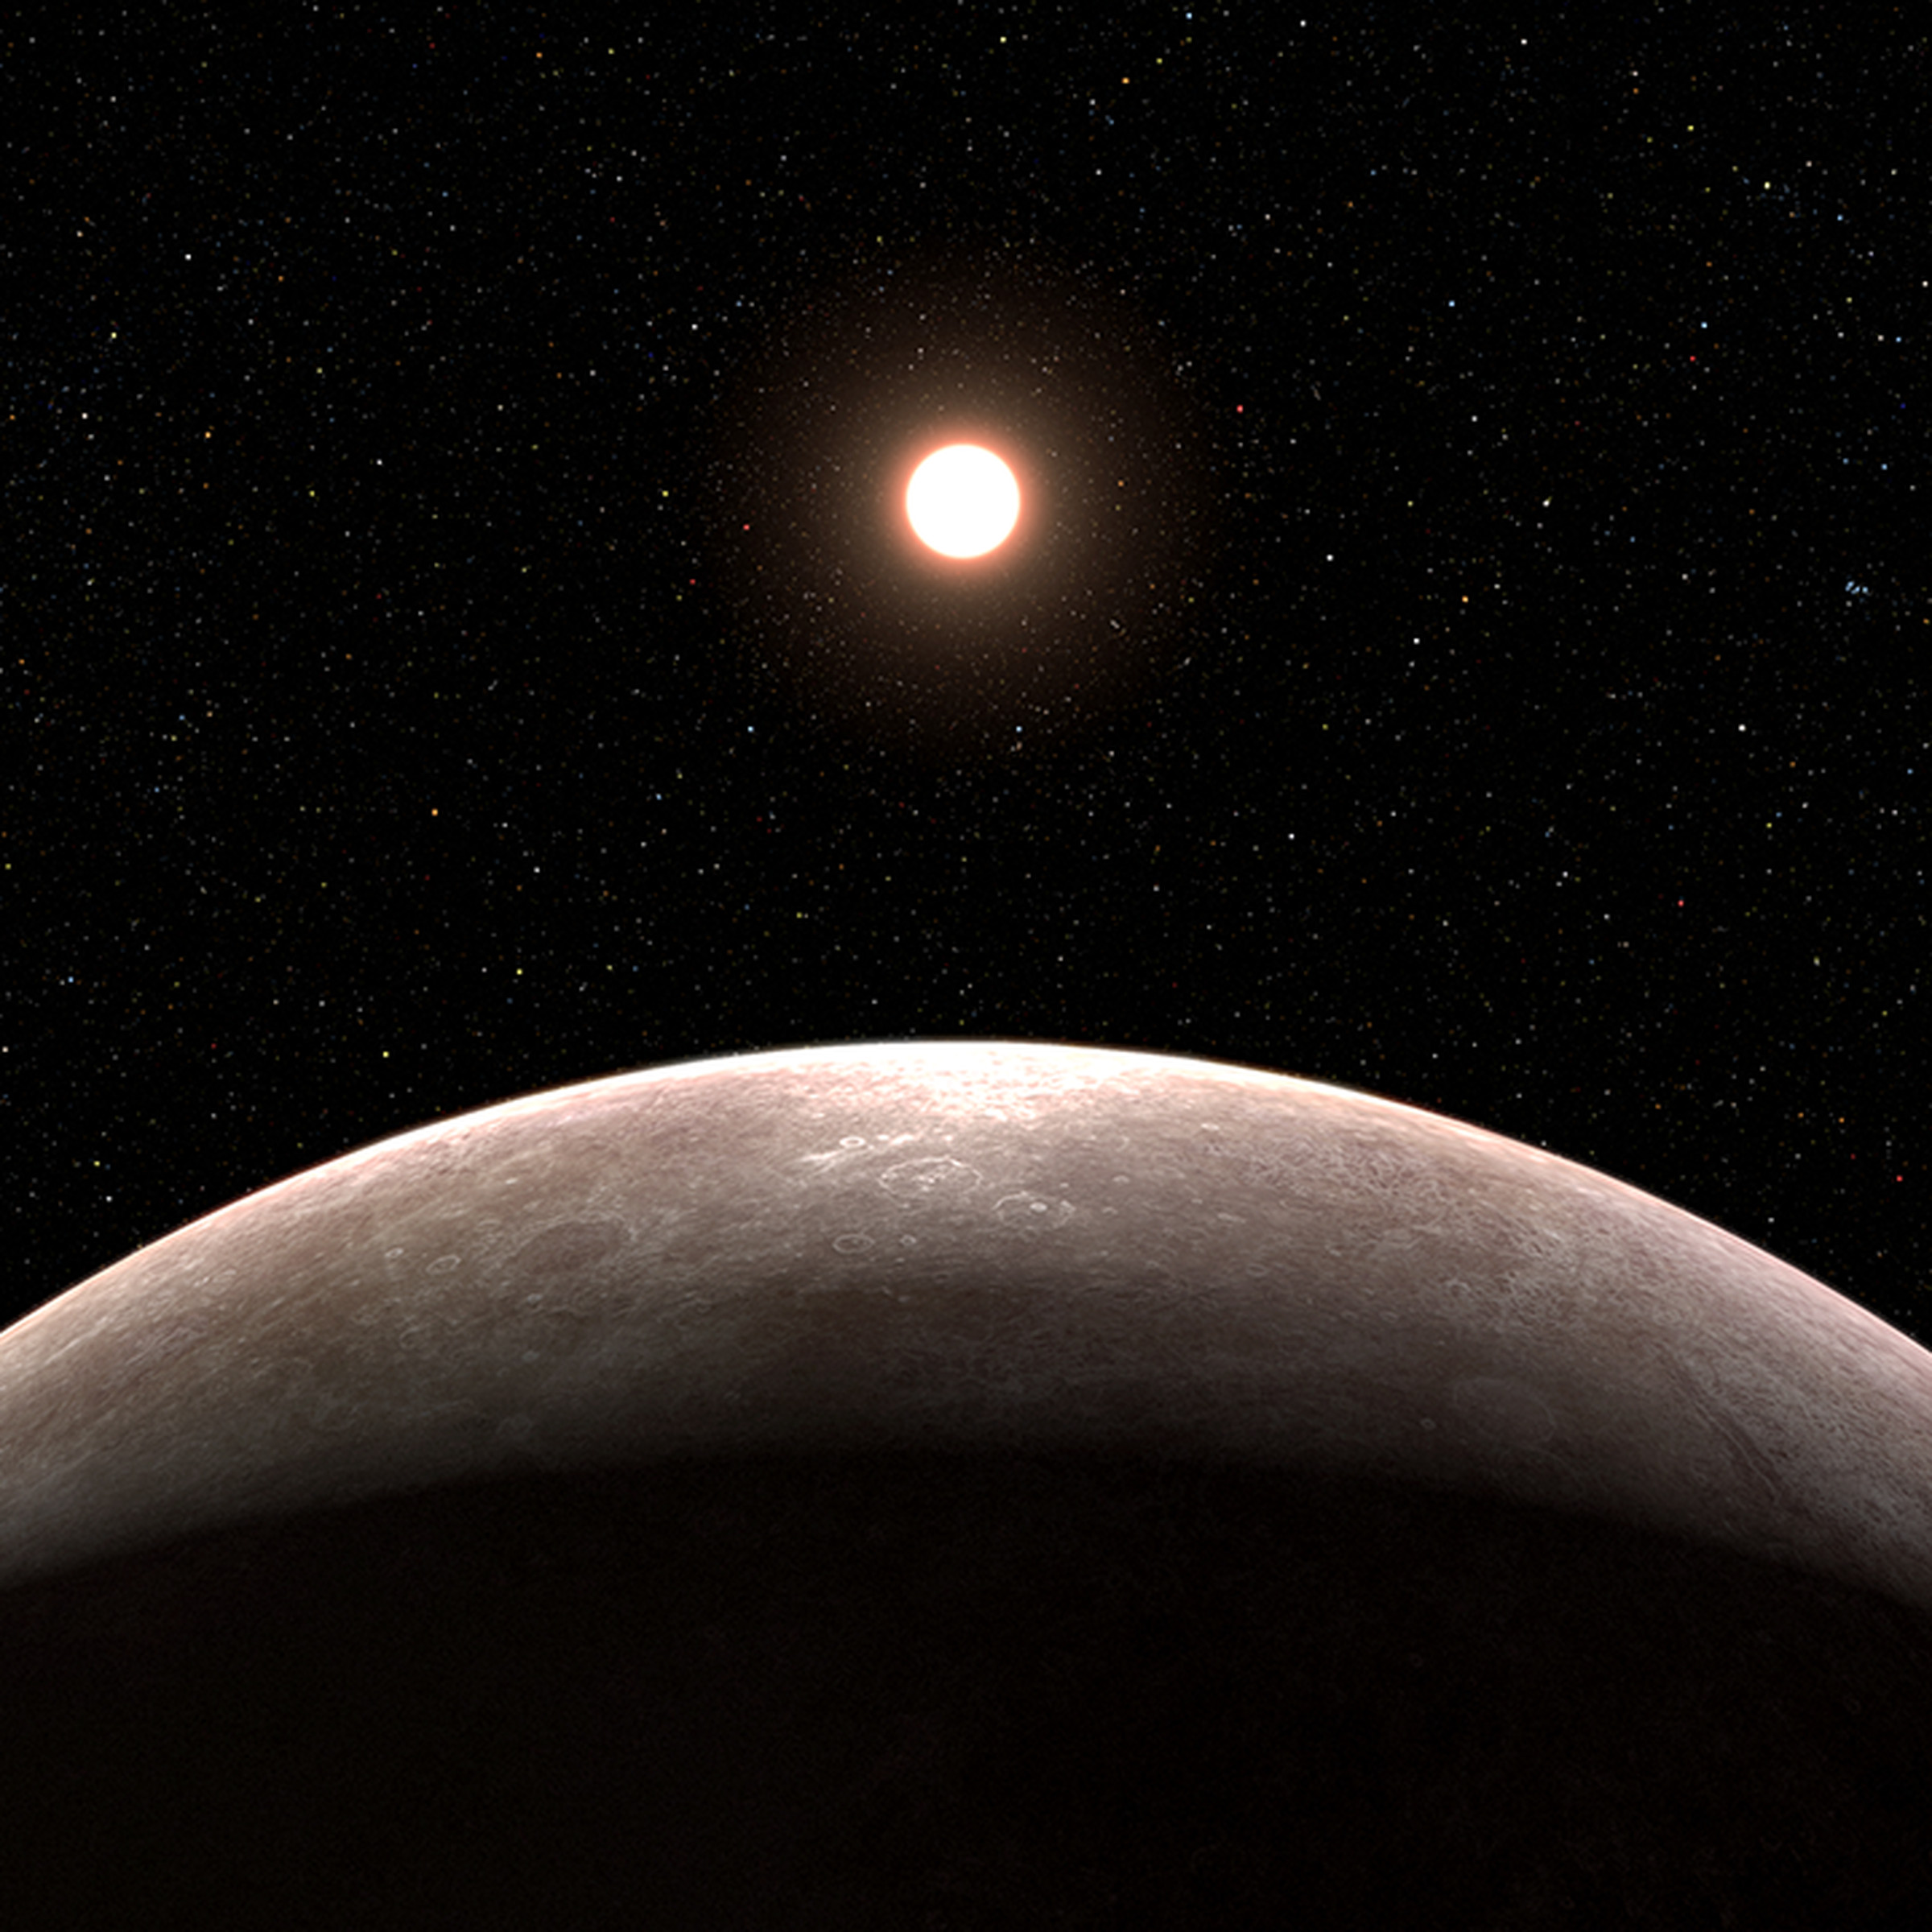 Exoplanet illustration